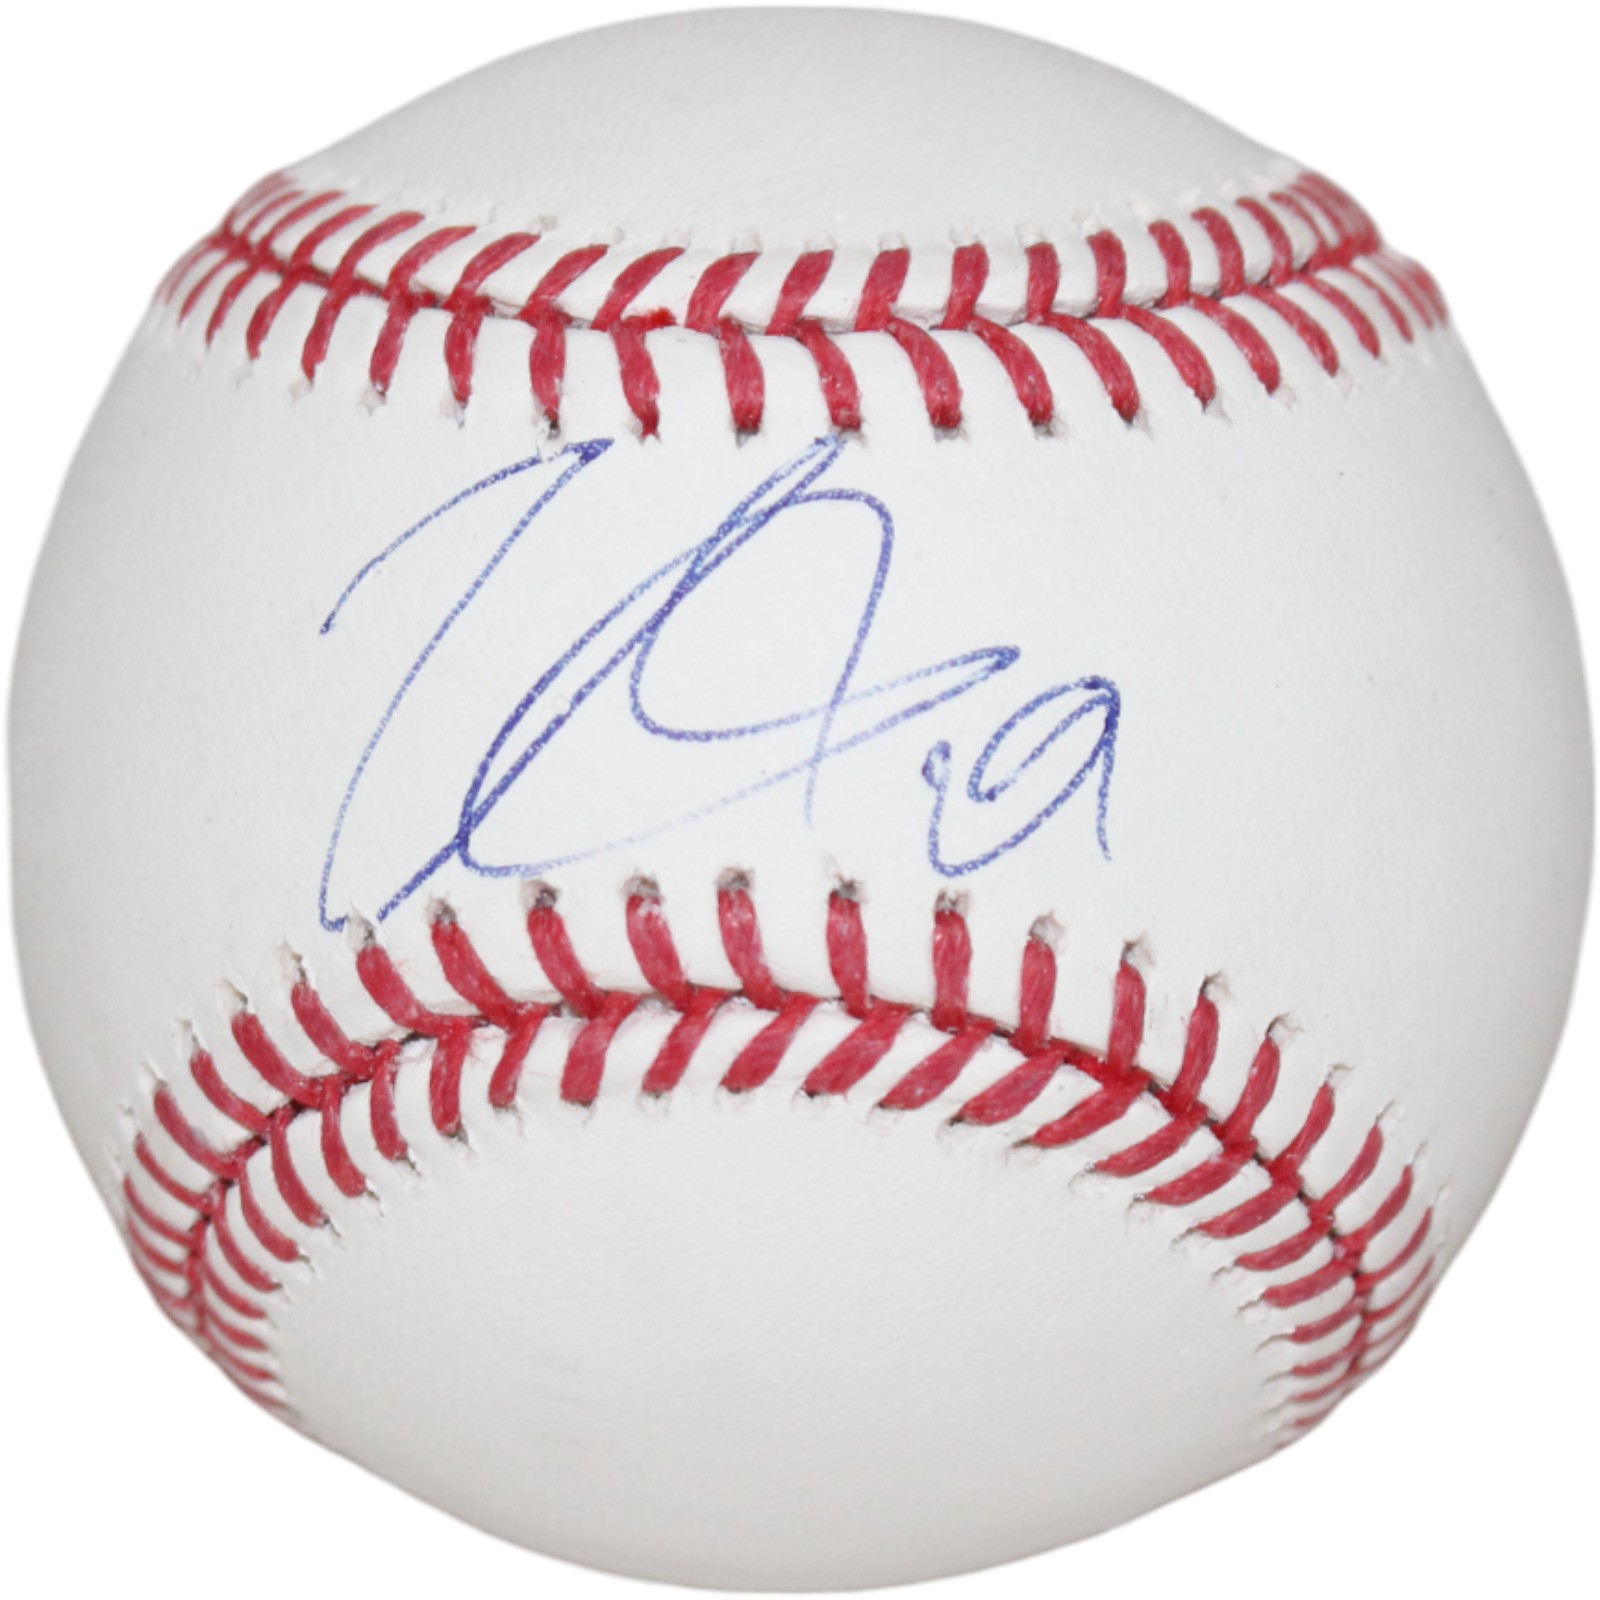 Nate MacKinnon Autographed/Signed Colorado Avalanche Baseball JSA